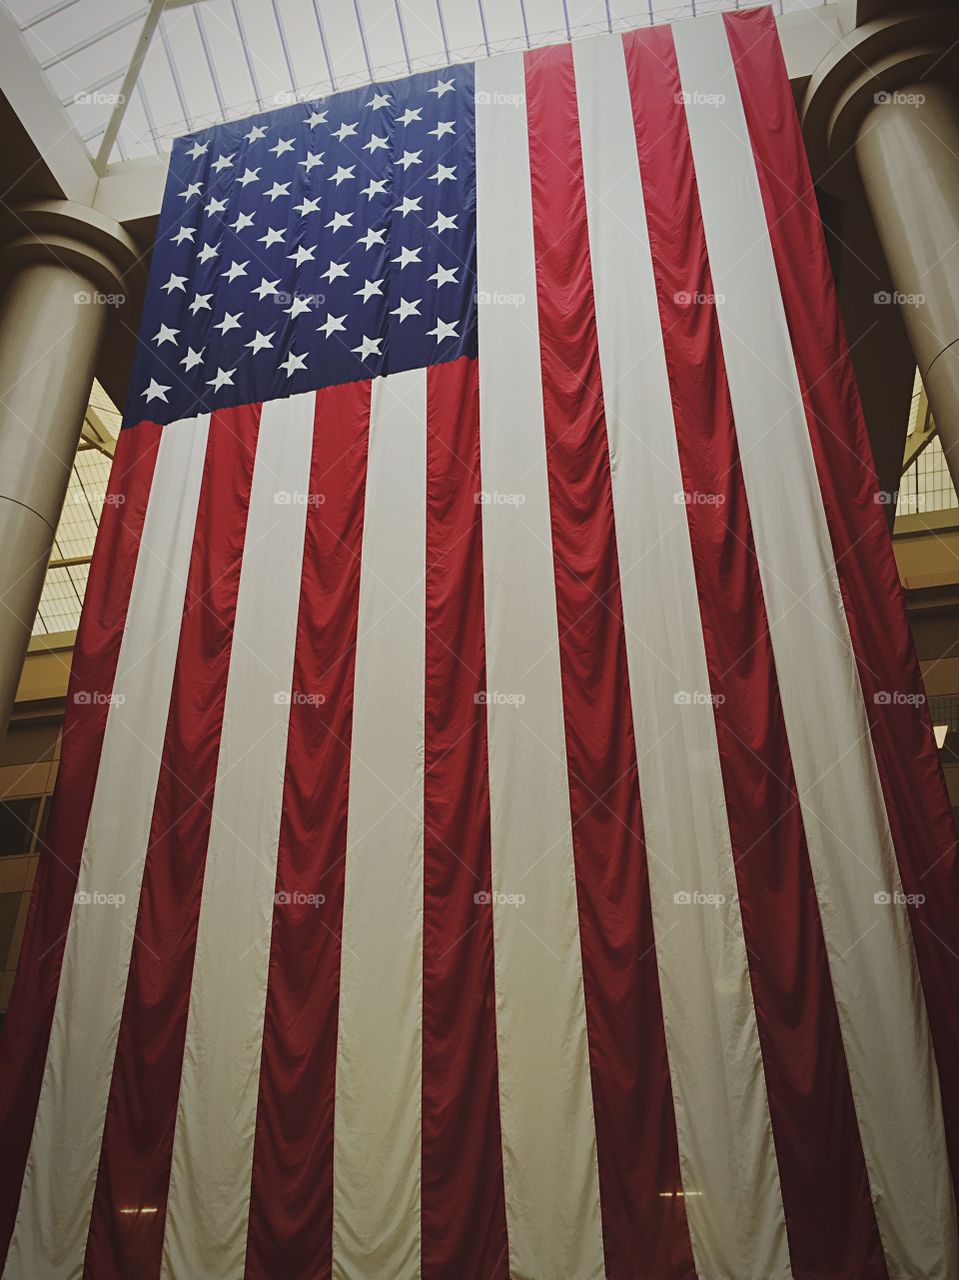 American flag, hanging